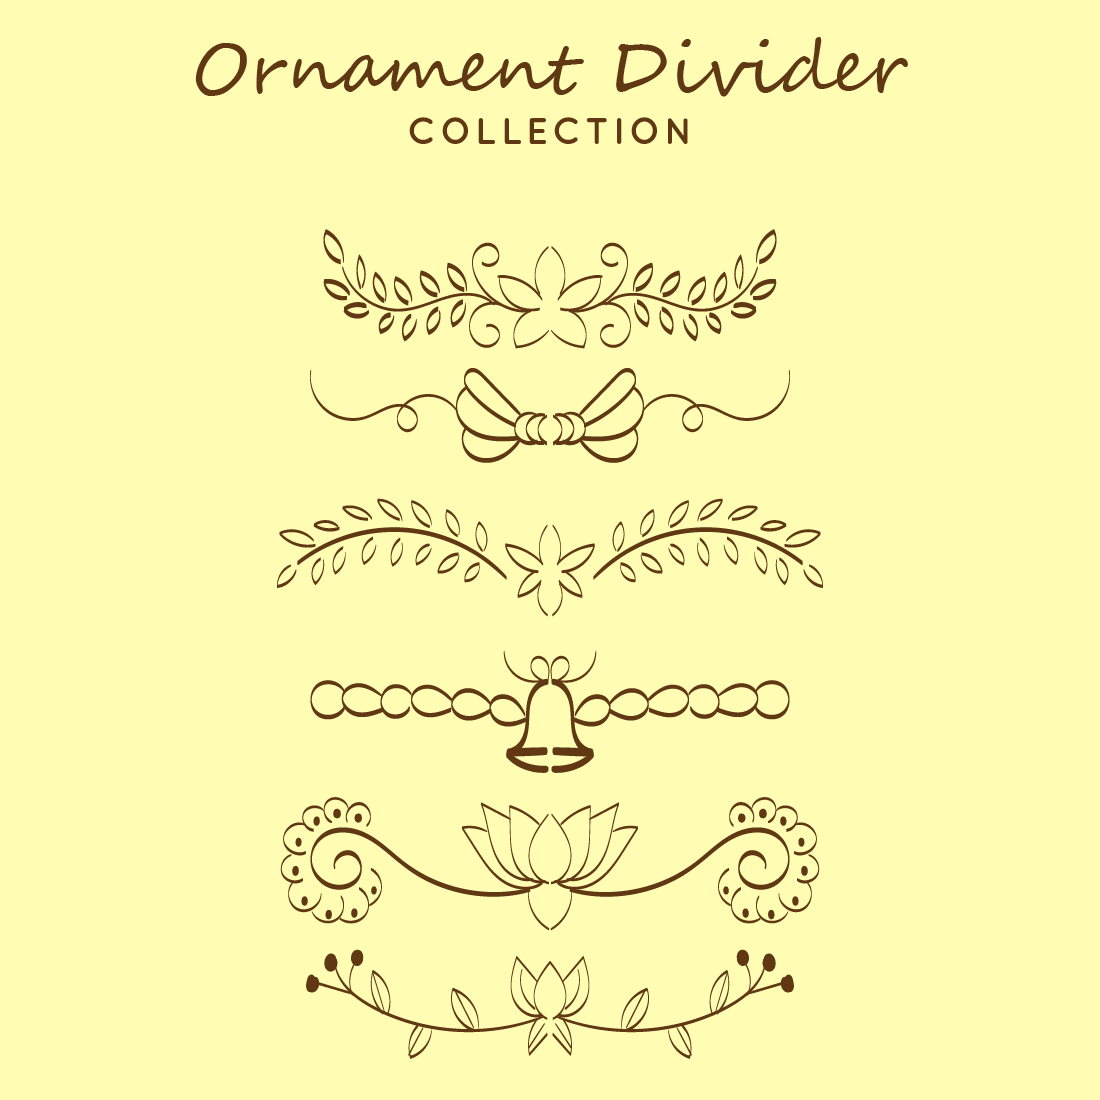 6 Unique Ornament Divider Collection Cover Image.